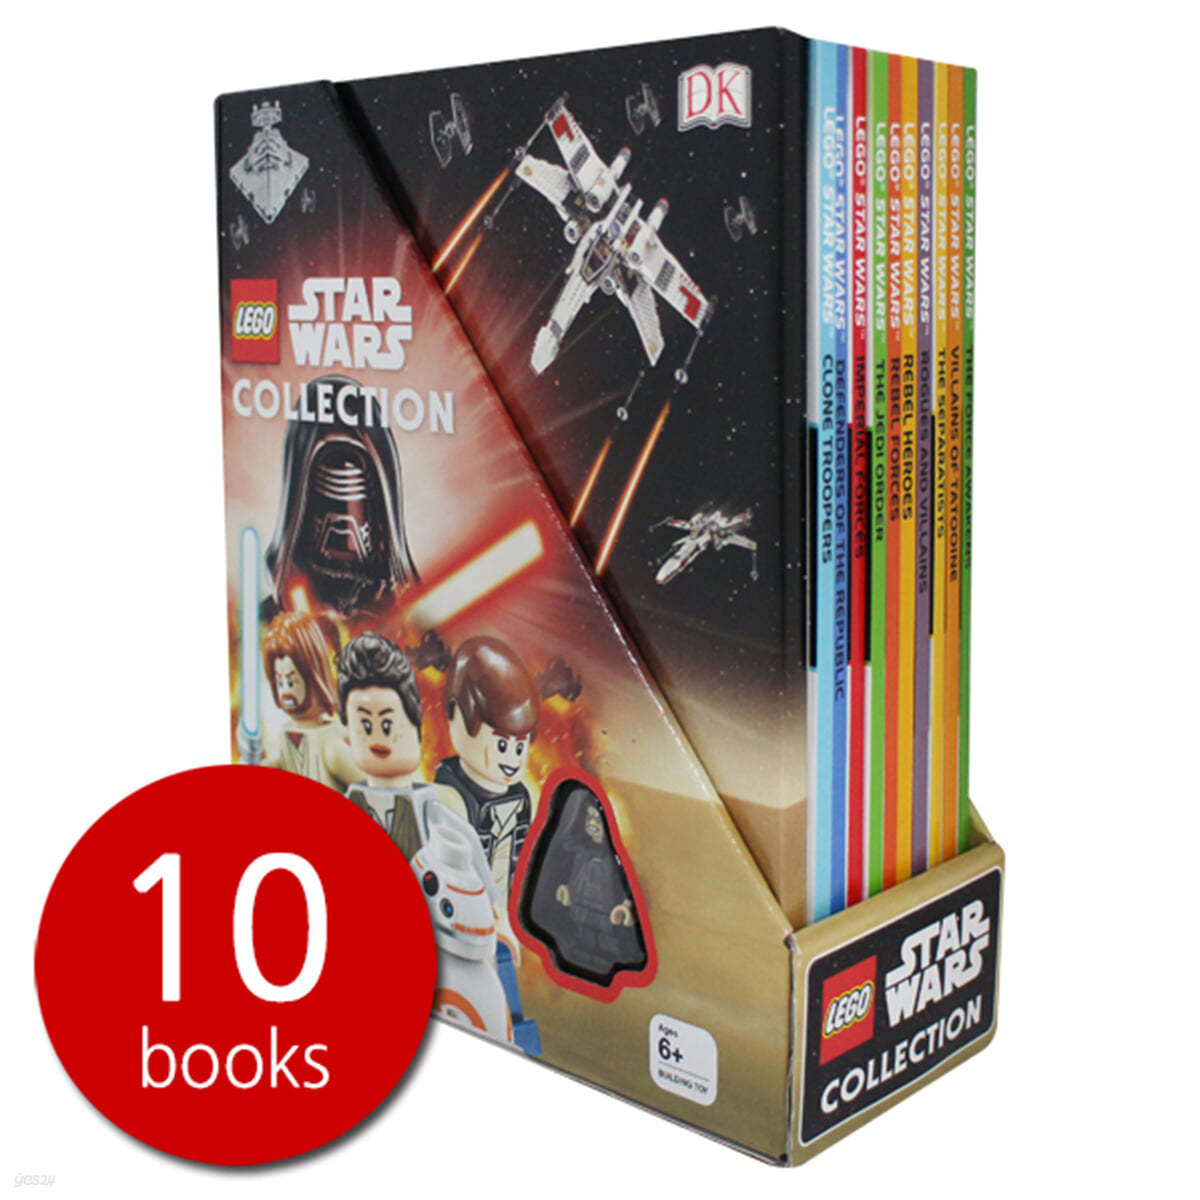 DK 레고 스타워즈 컬렉션 10종 박스 세트 (피규어 1개 포함) DK Lego Star Wars Collection 10 Books Set